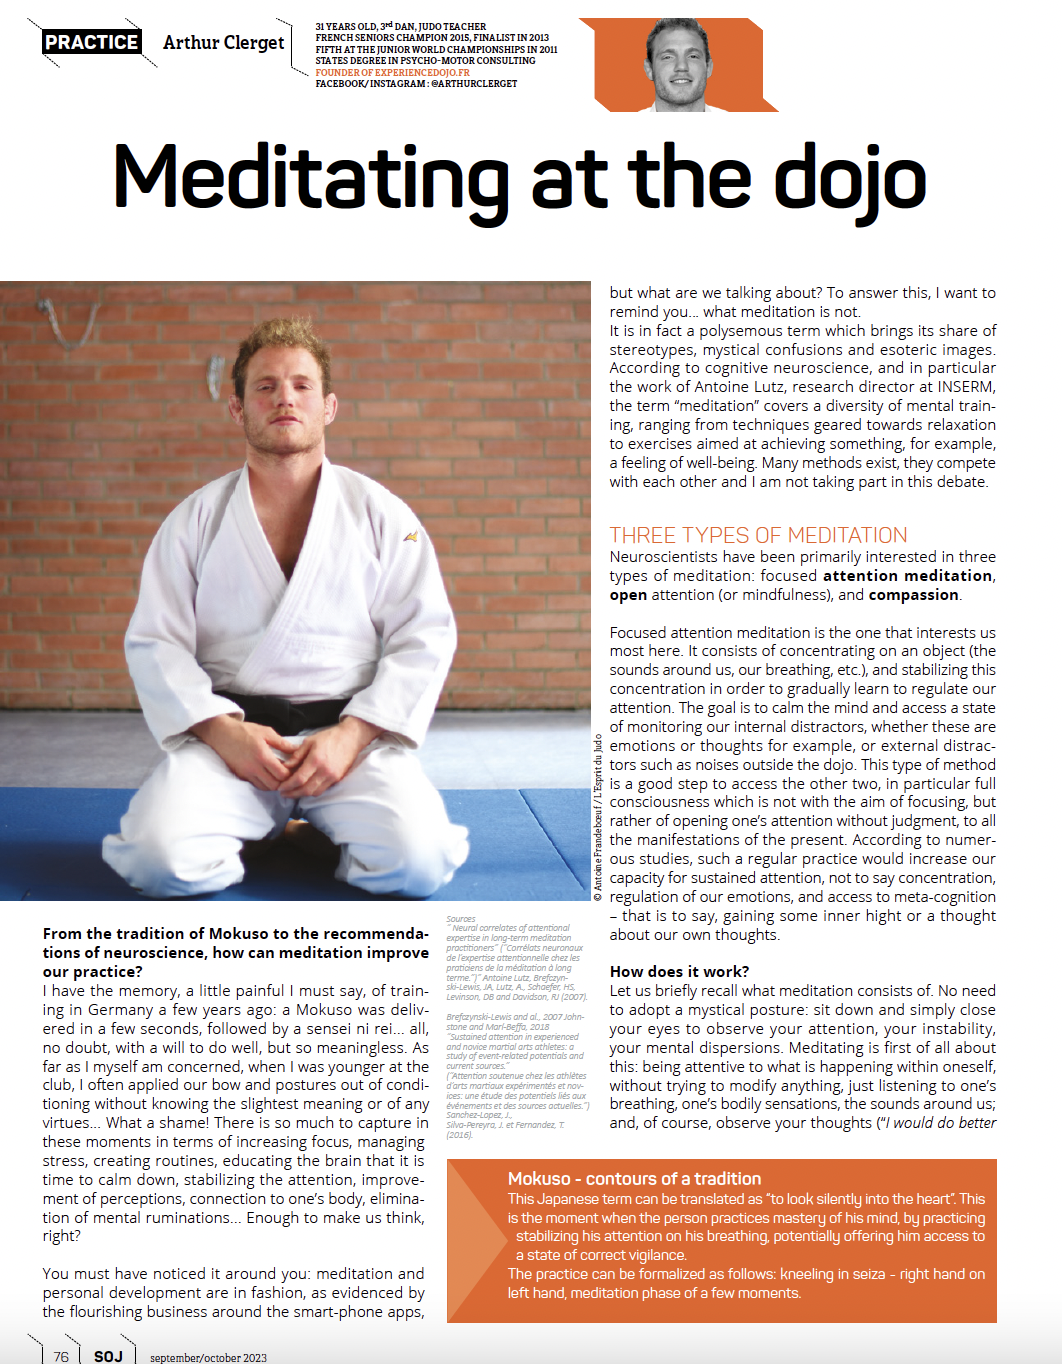 Spirit of Judo #°106 Meditating at the dojo